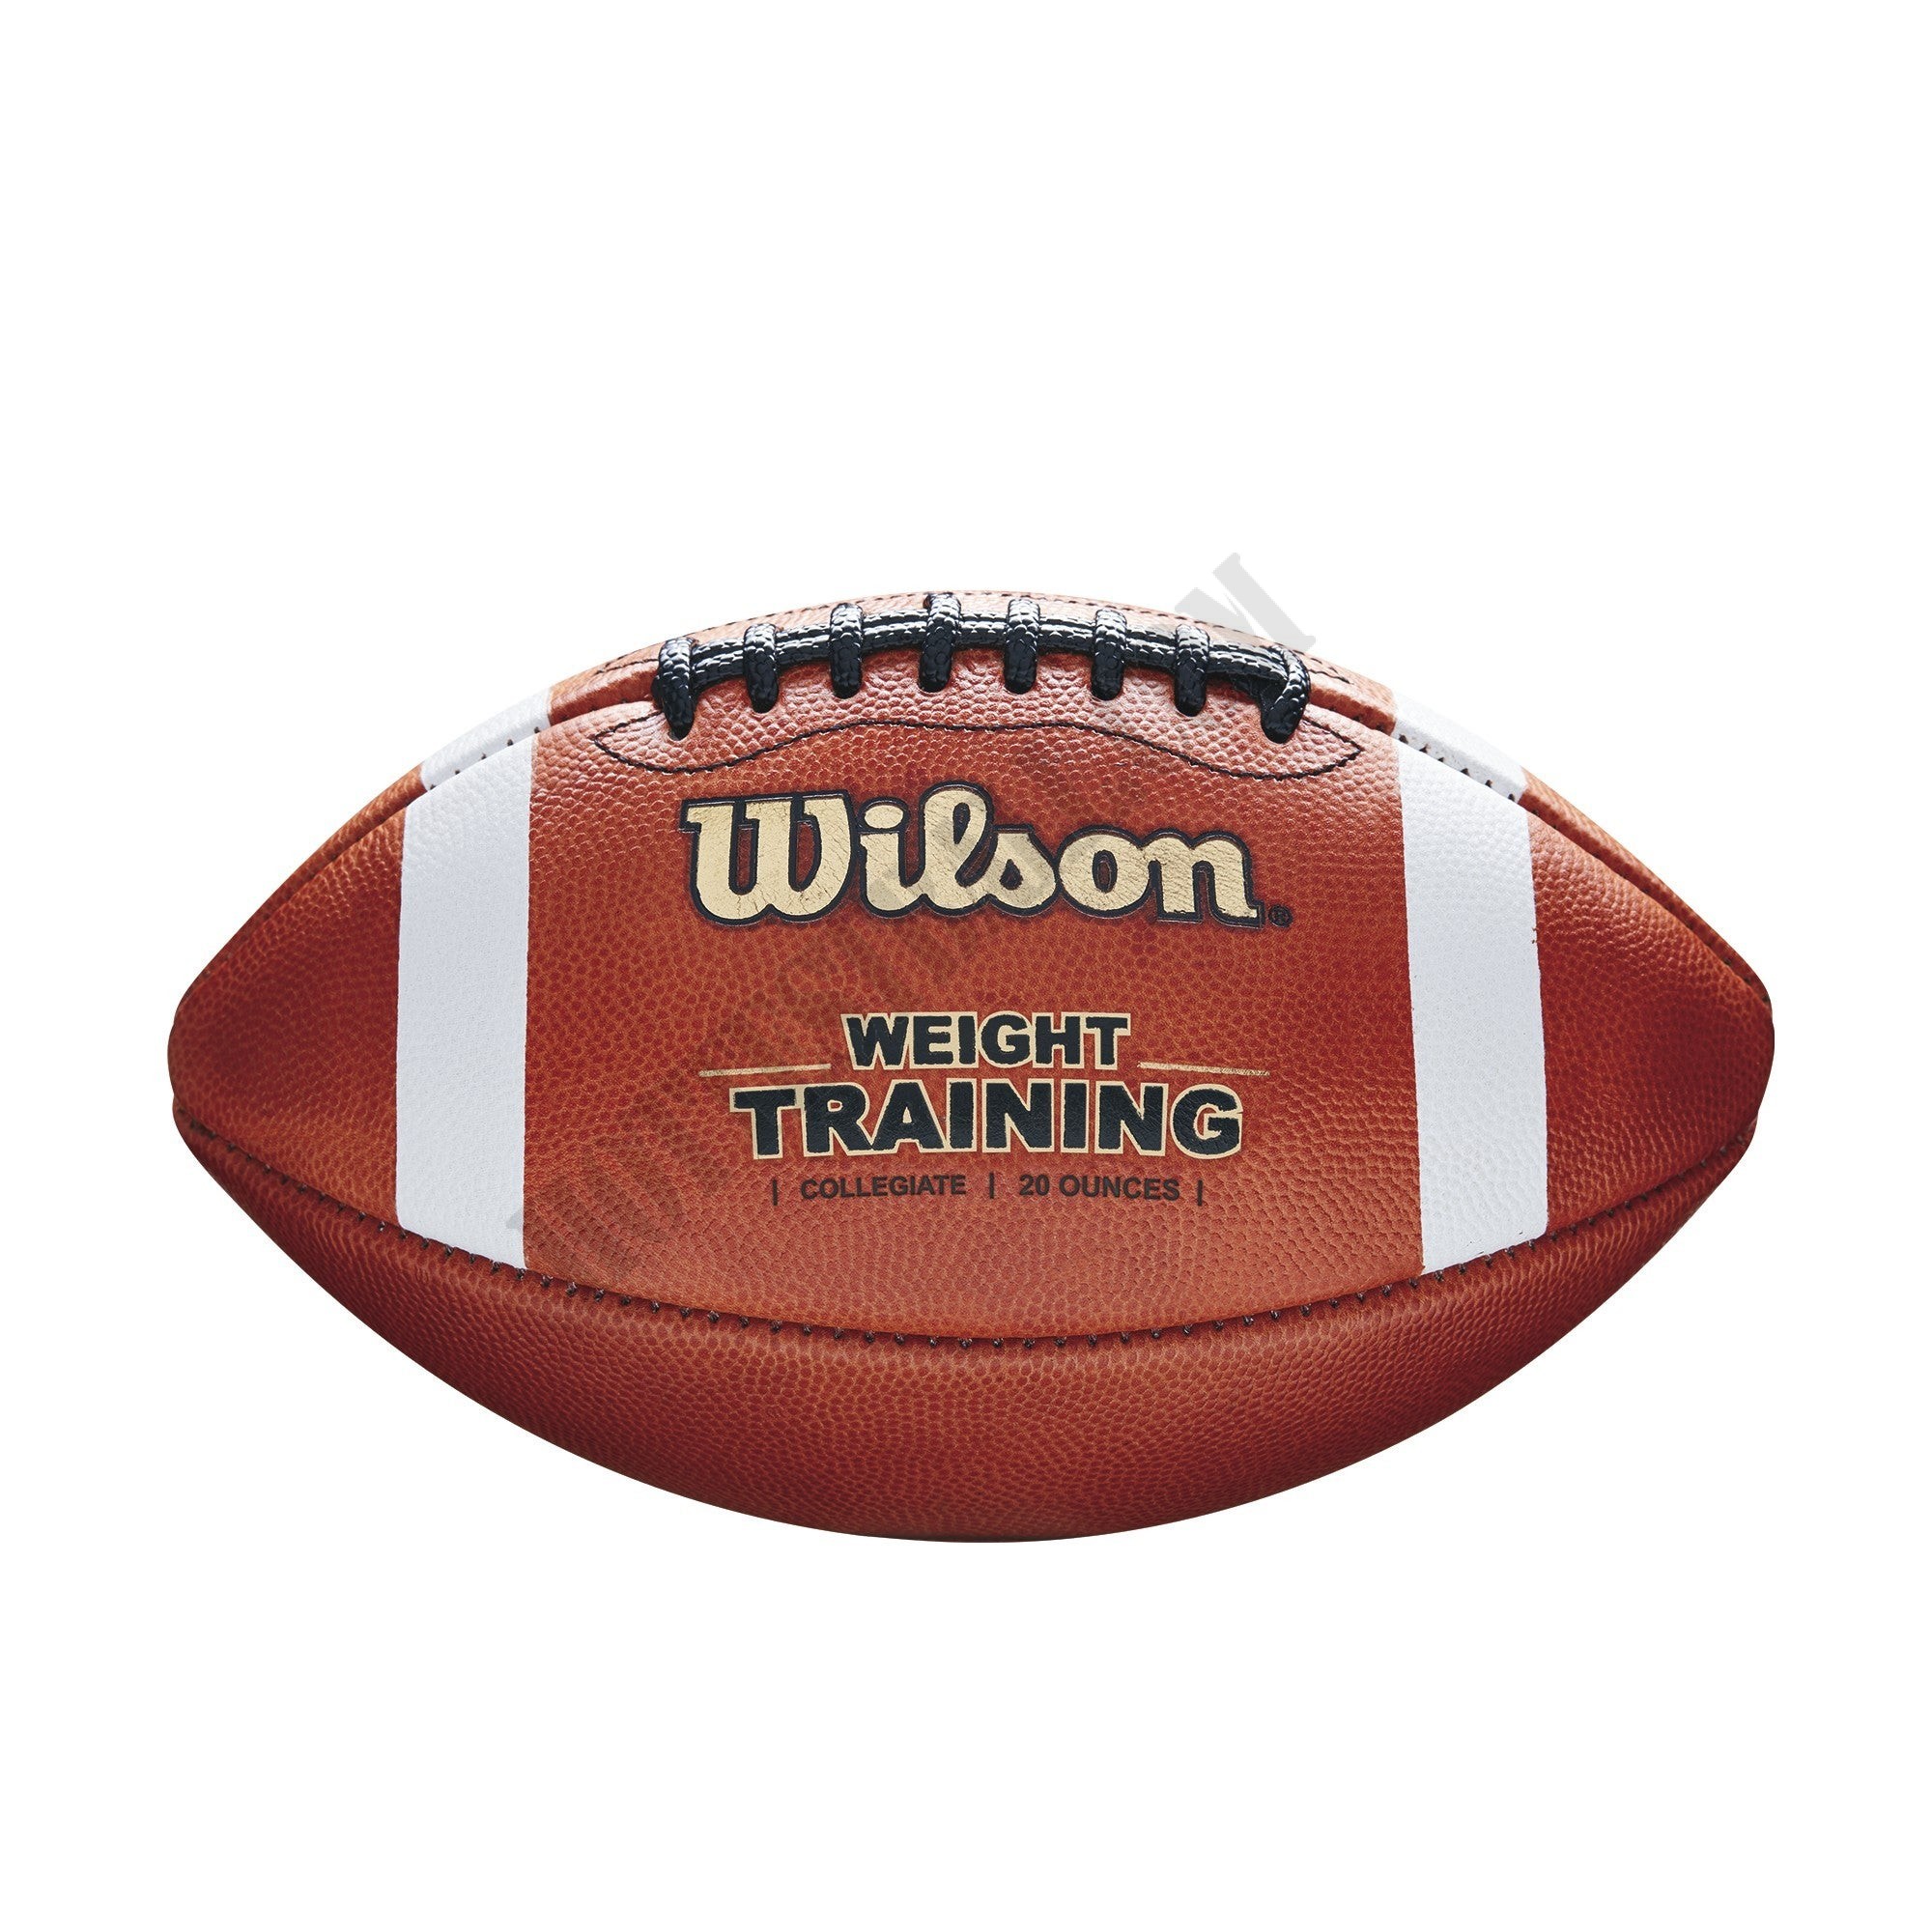 Weight Training Football - Wilson Discount Store - Weight Training Football - Wilson Discount Store